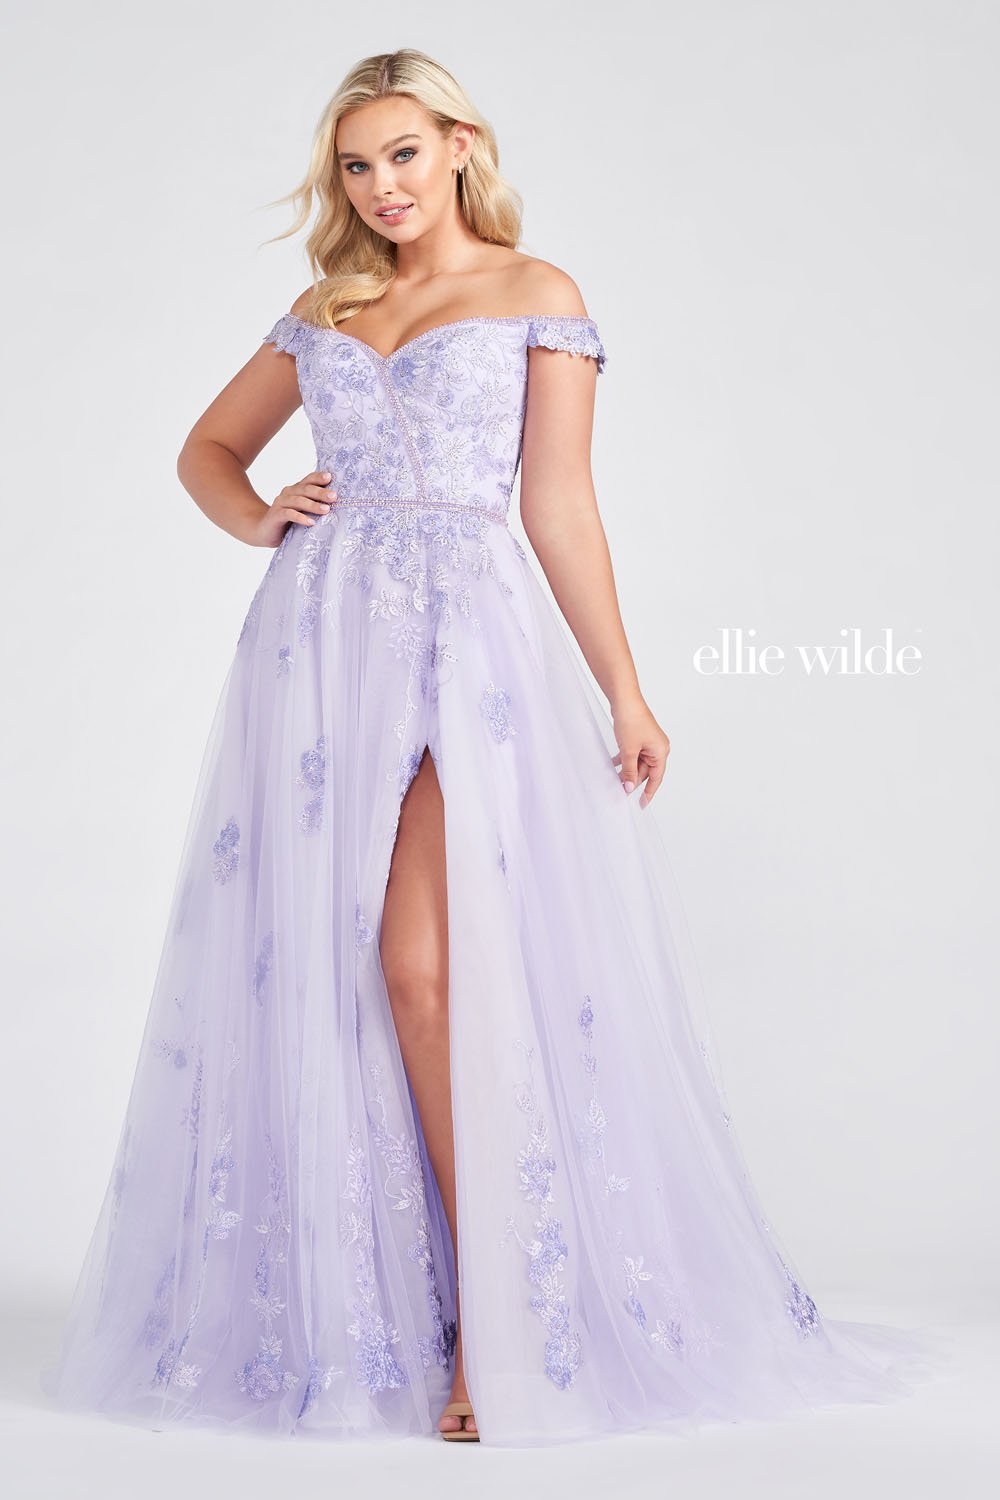 Ellie Wilde Lavender EW122111 Prom Dress Image.  Lavender formal dress.